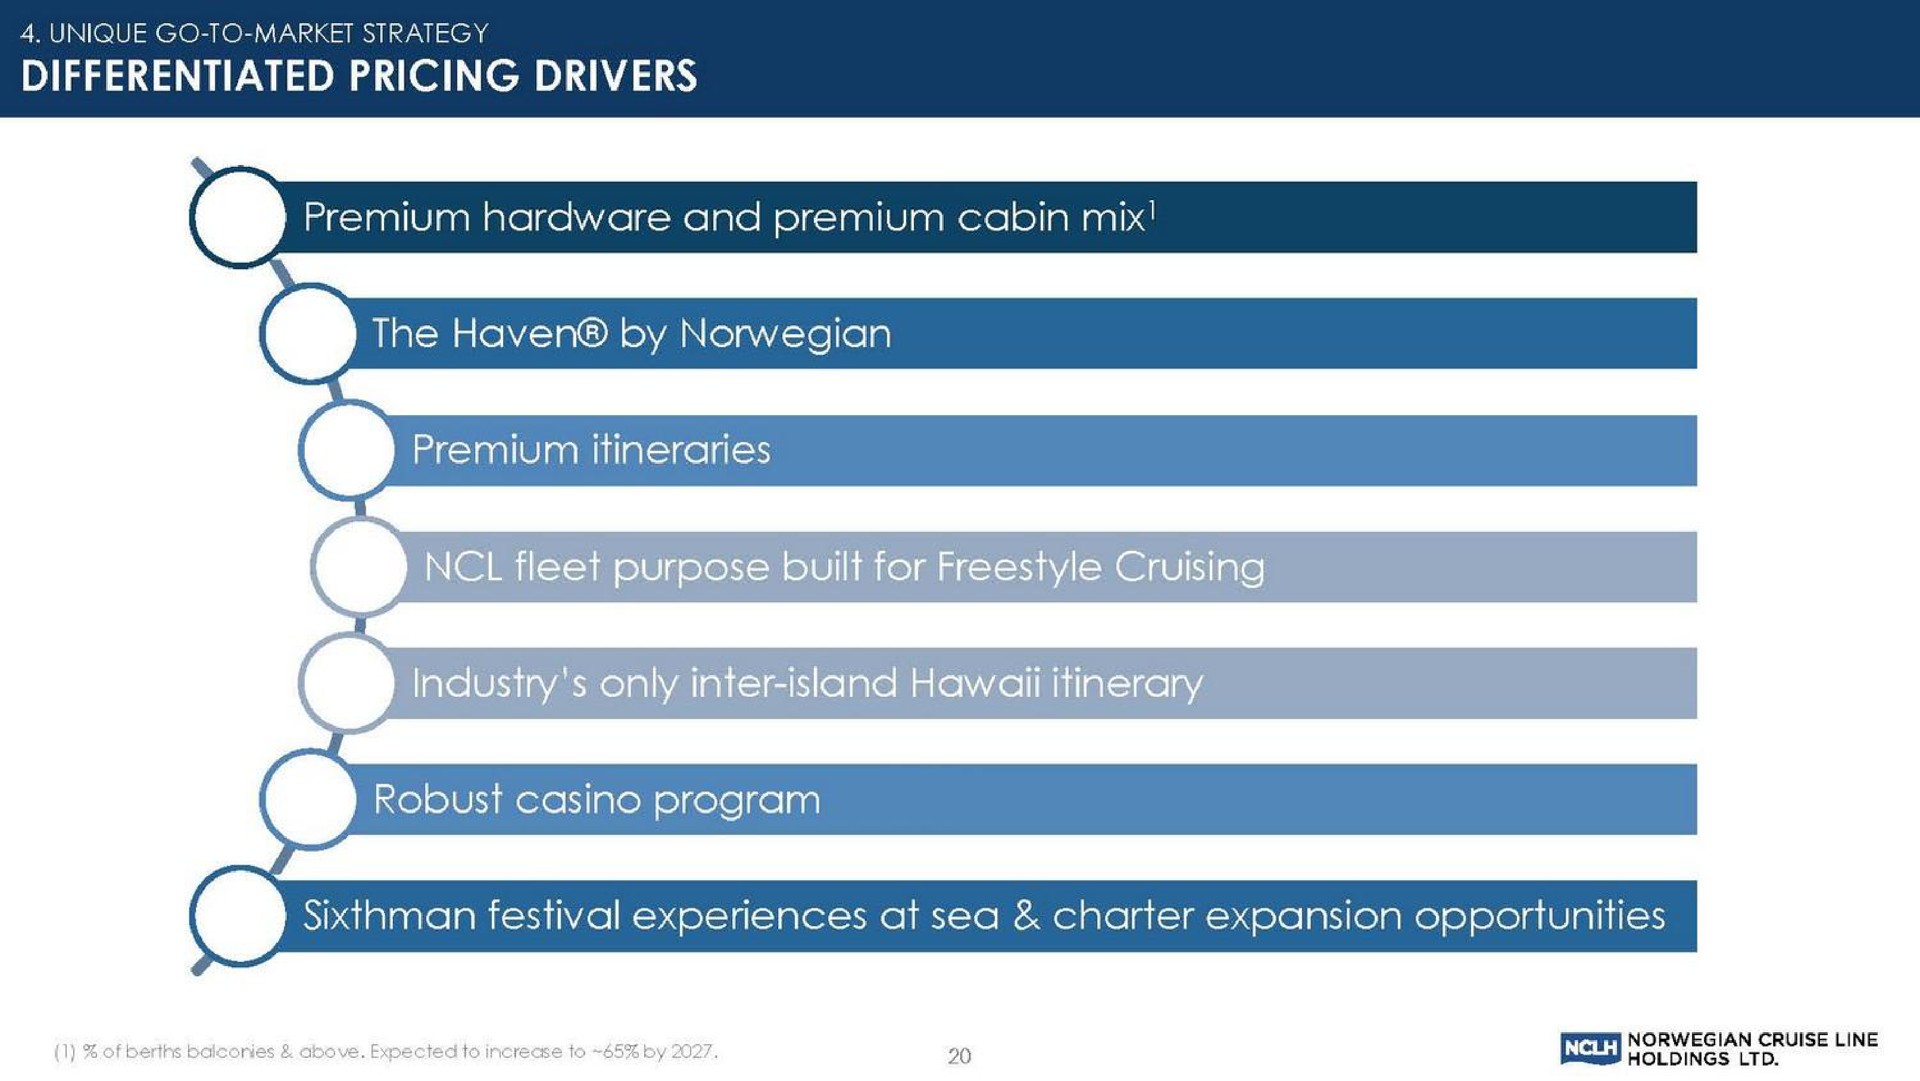 differentiated pricing drivers fleet purpose built for cruising | Norwegian Cruise Line